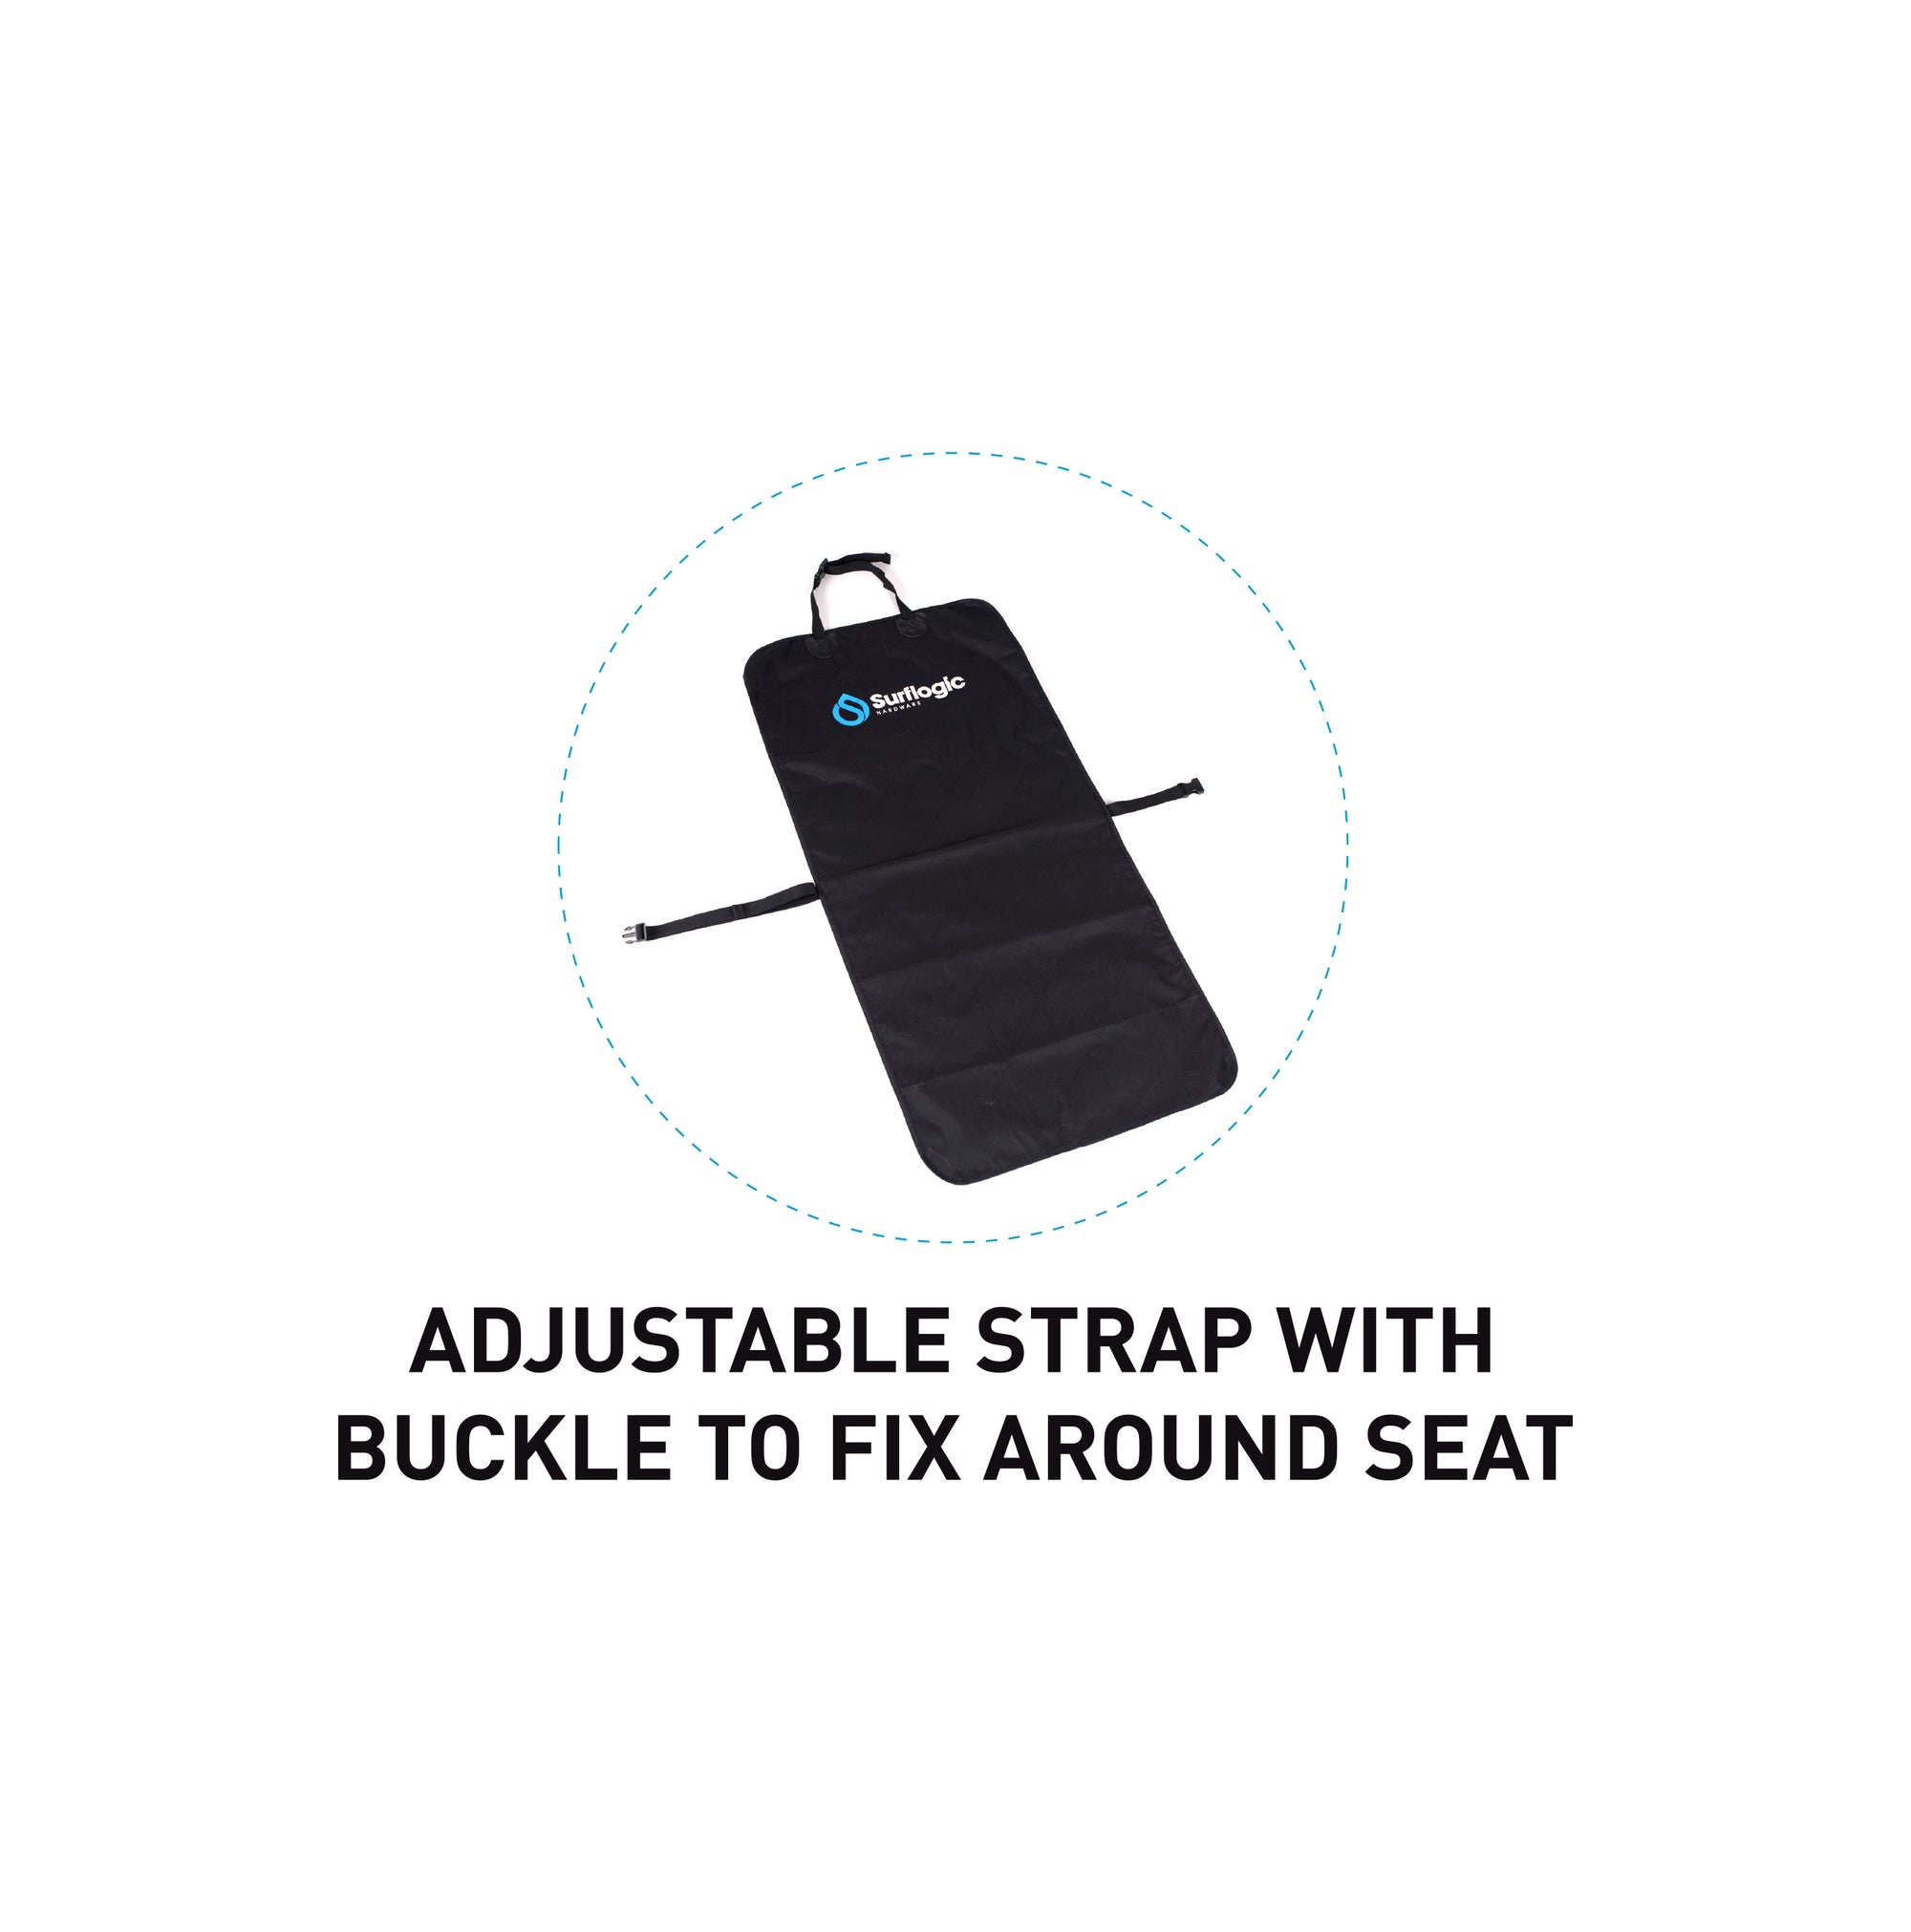 Surflogic Single Car Seat Cover Universal